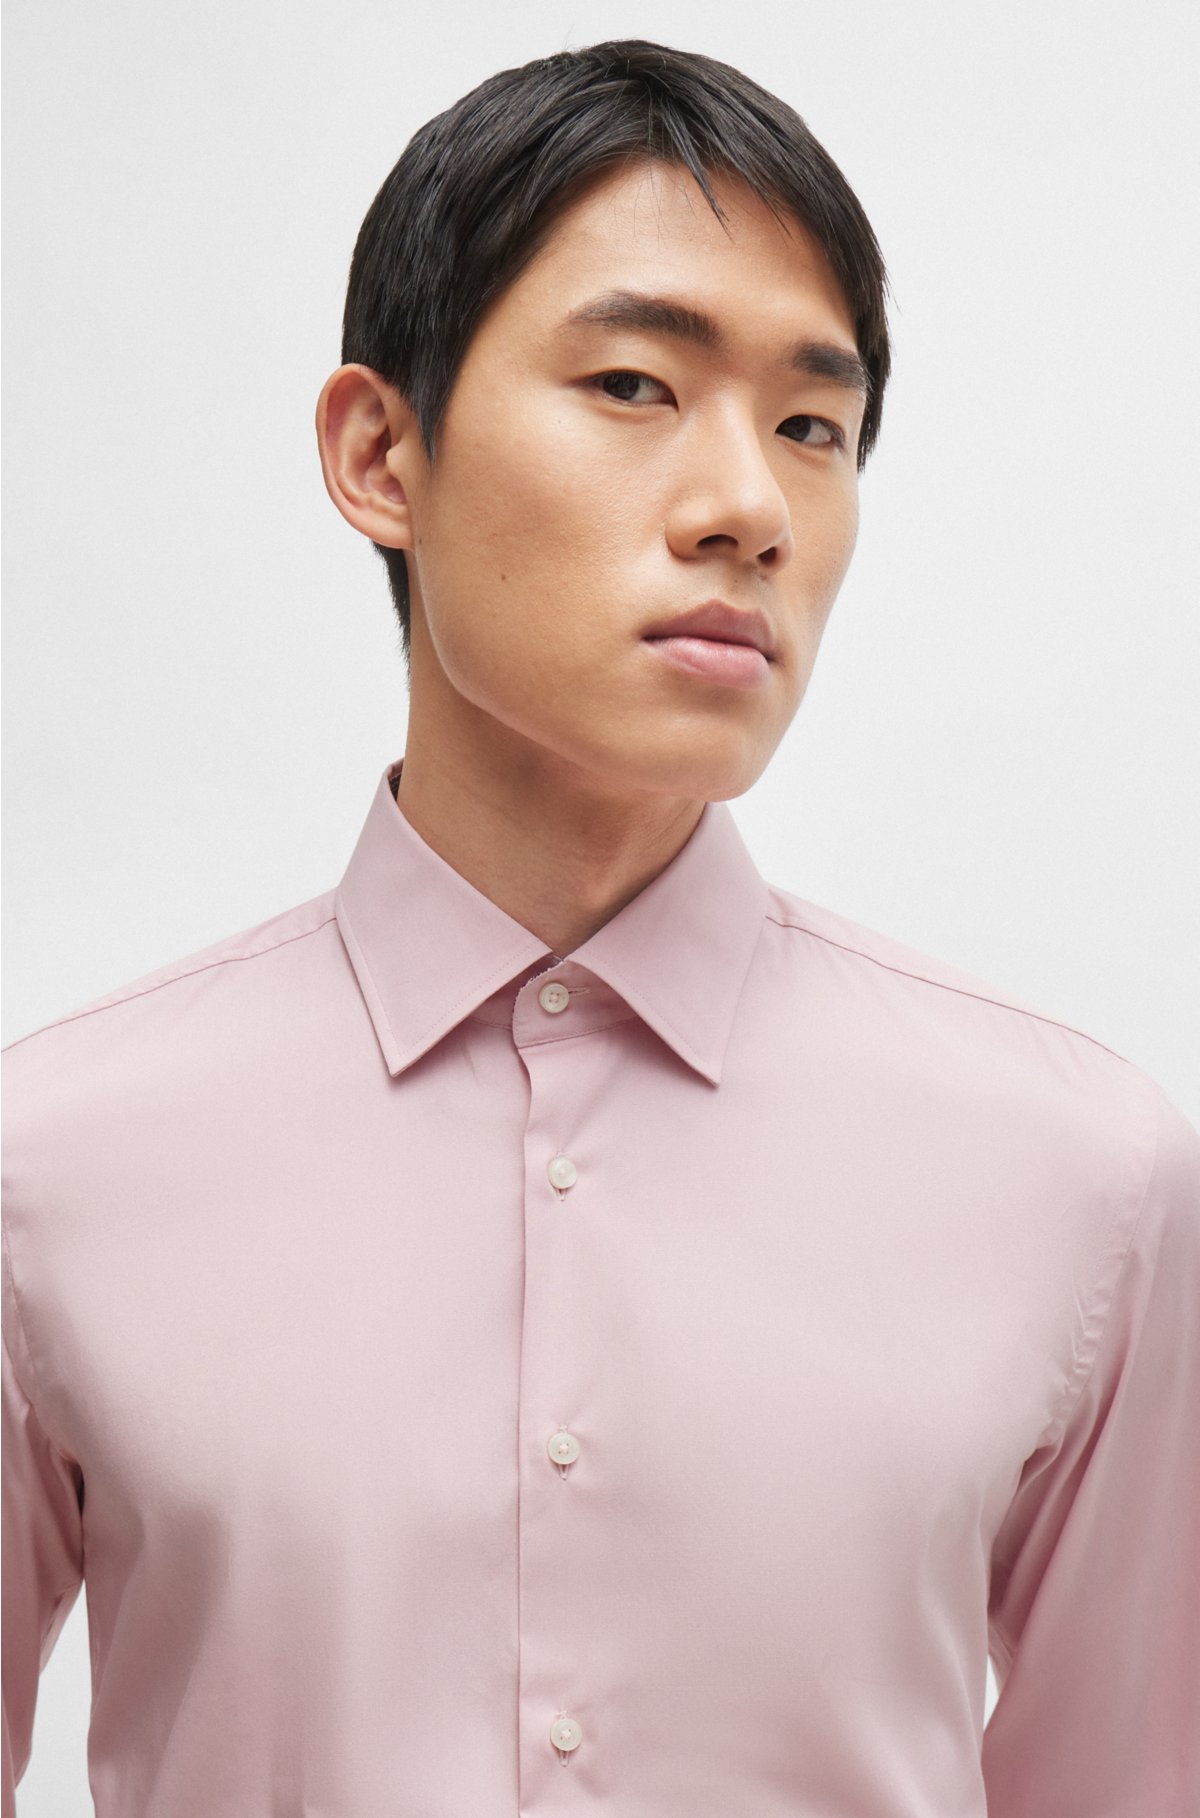 Slim-fit shirt in easy-iron stretch-cotton poplin, light pink